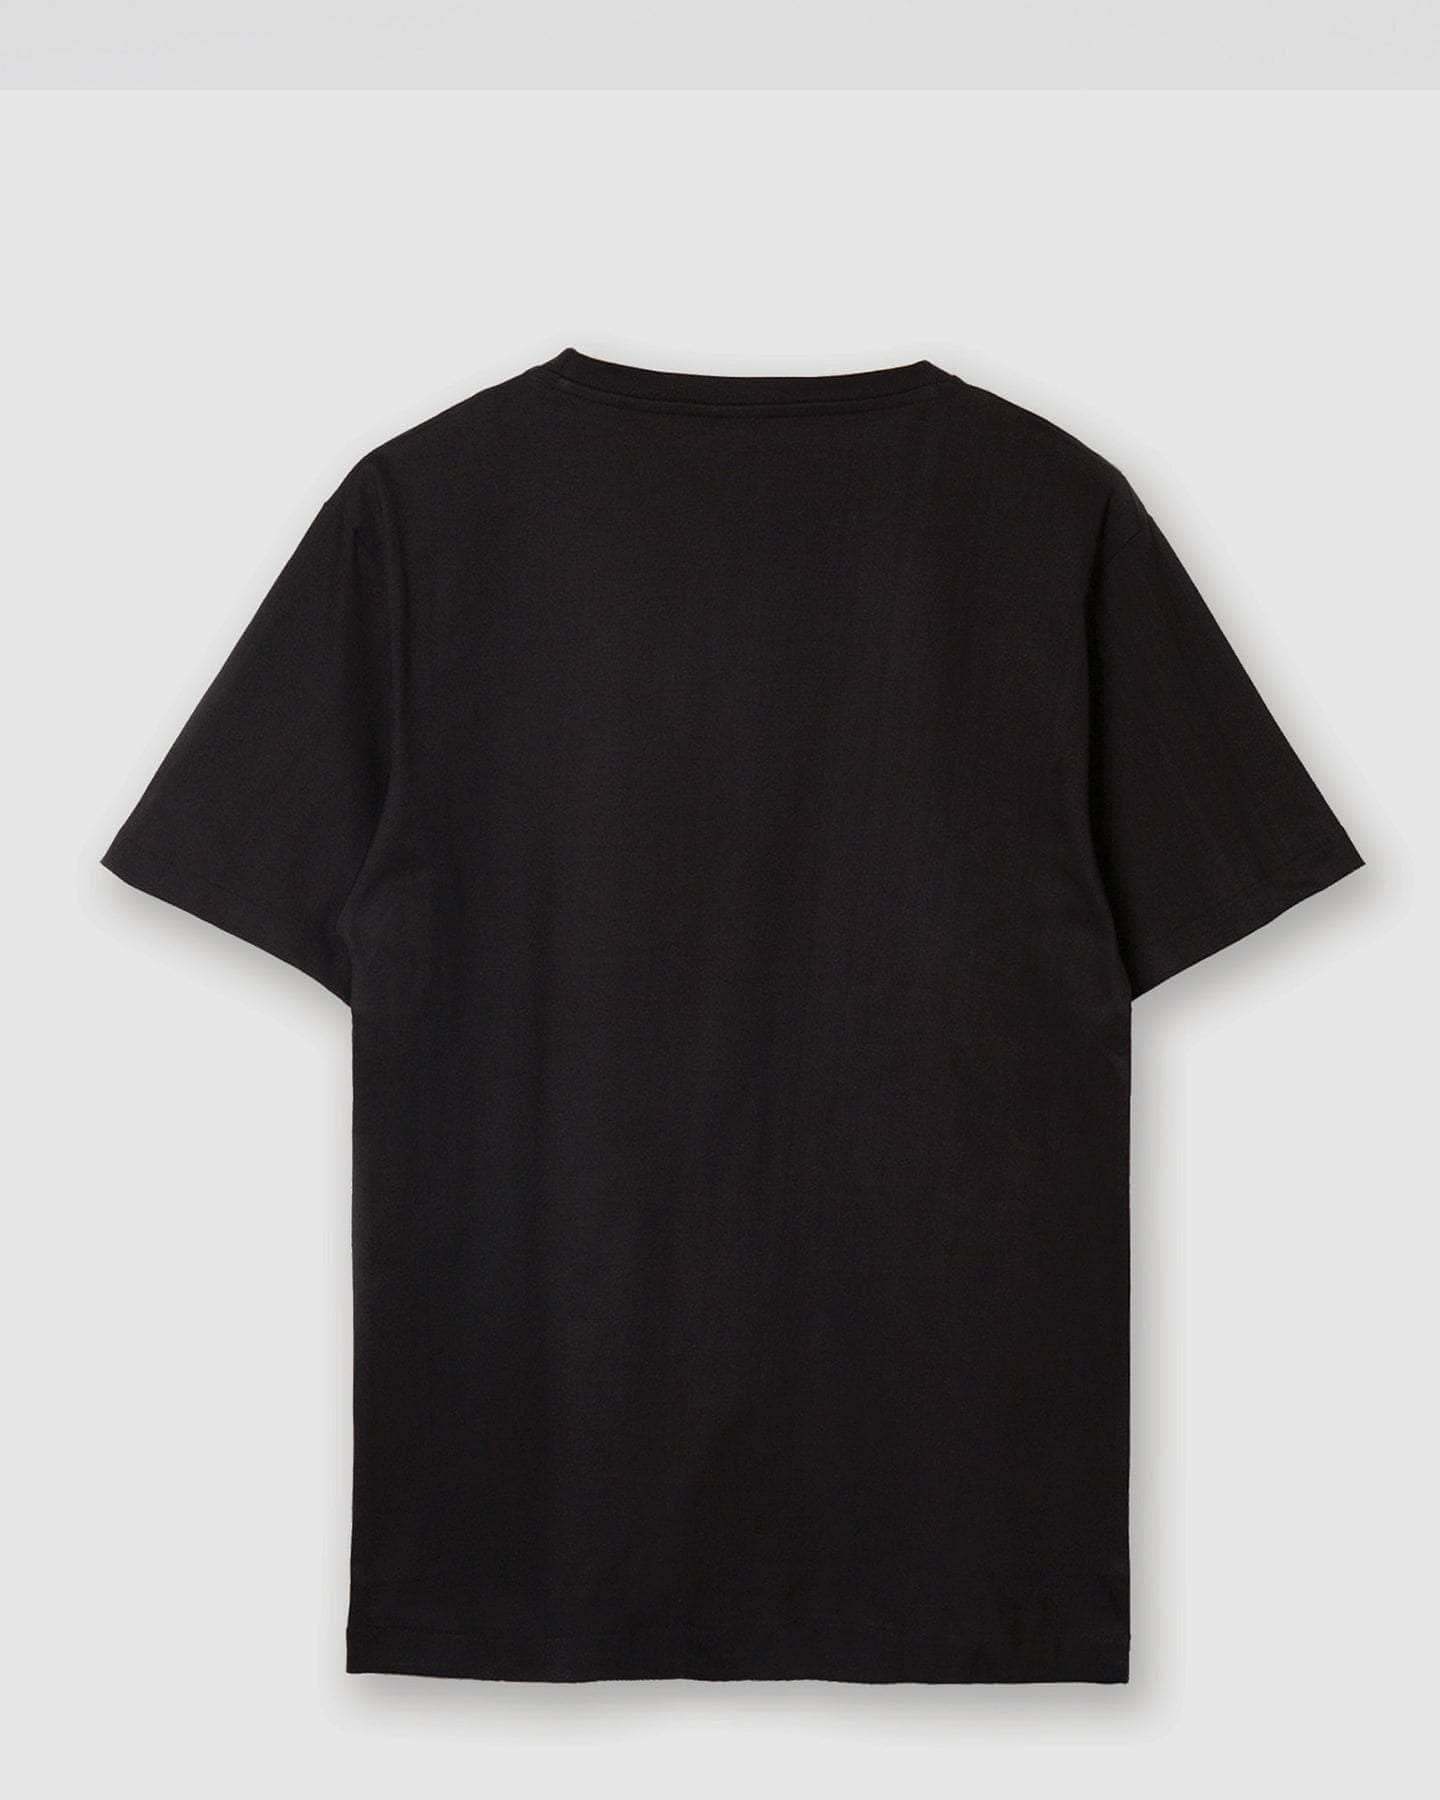 Spanner Boy S/S T-Shirt Black